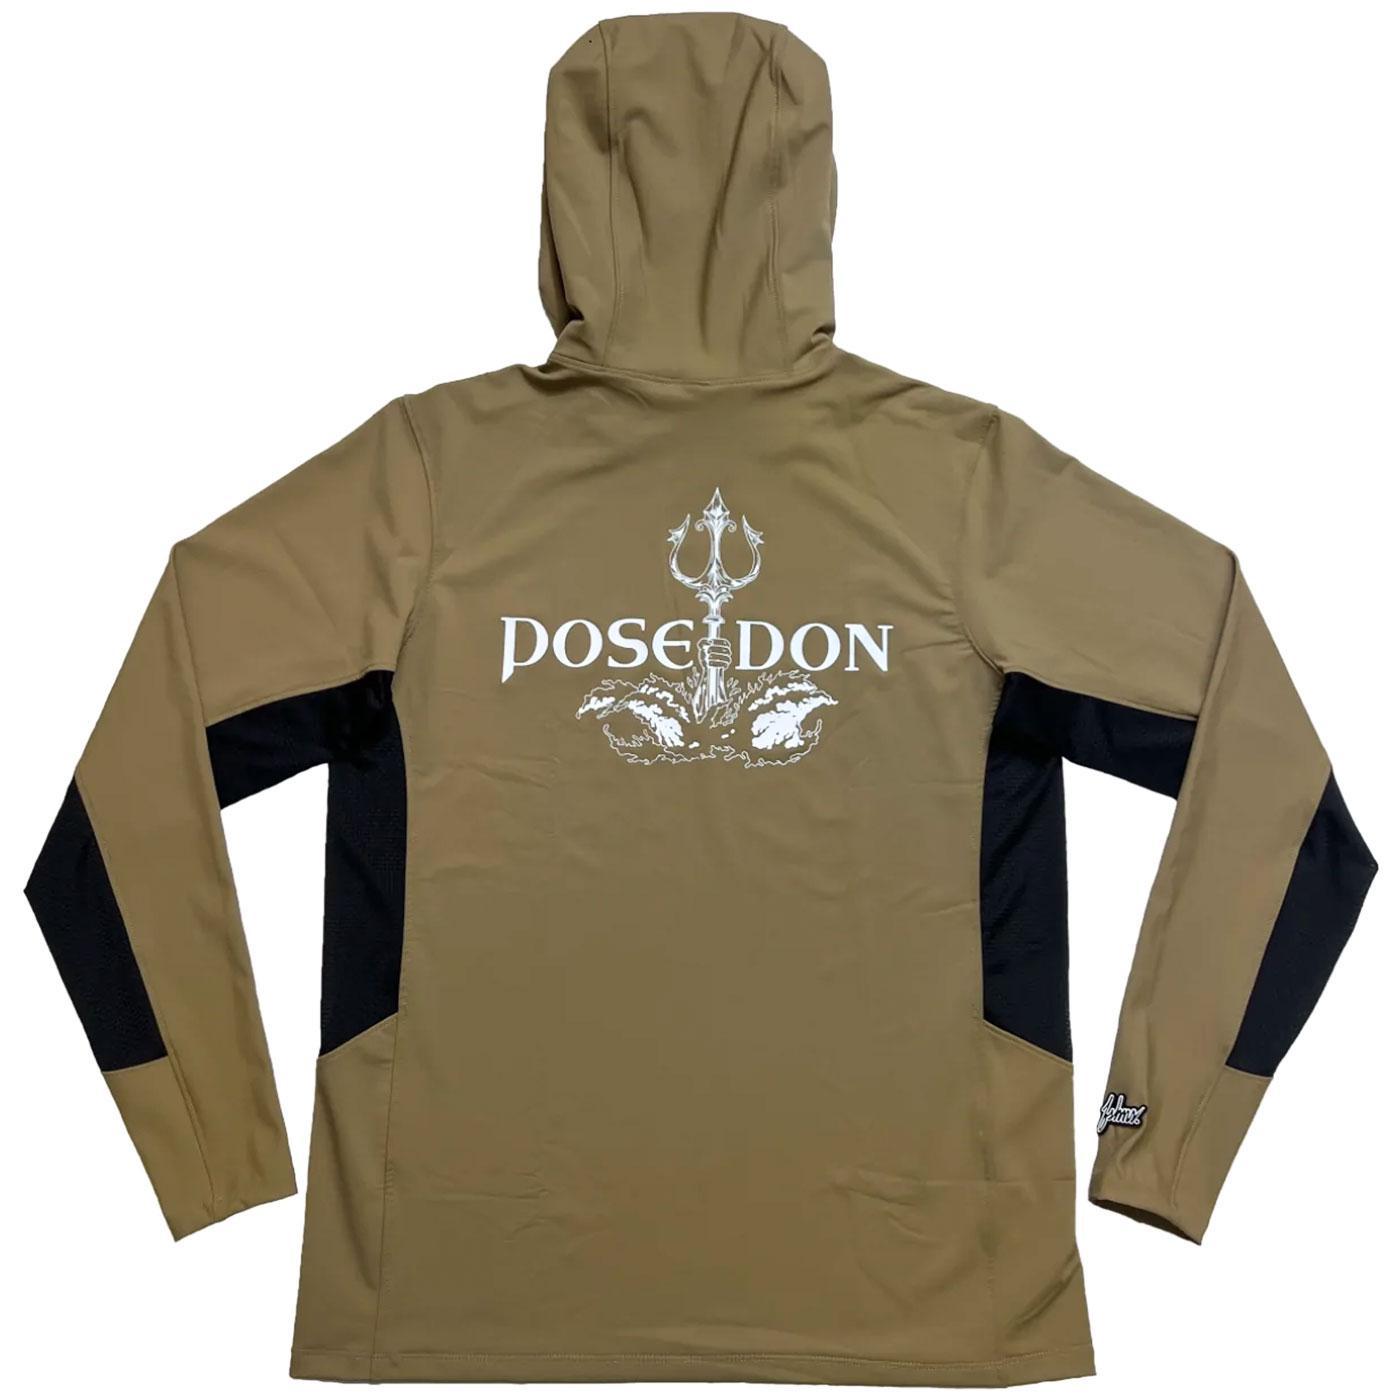 Trident Hooded Shirt Poseidon (Khaki) Rear | FSHNS Brand